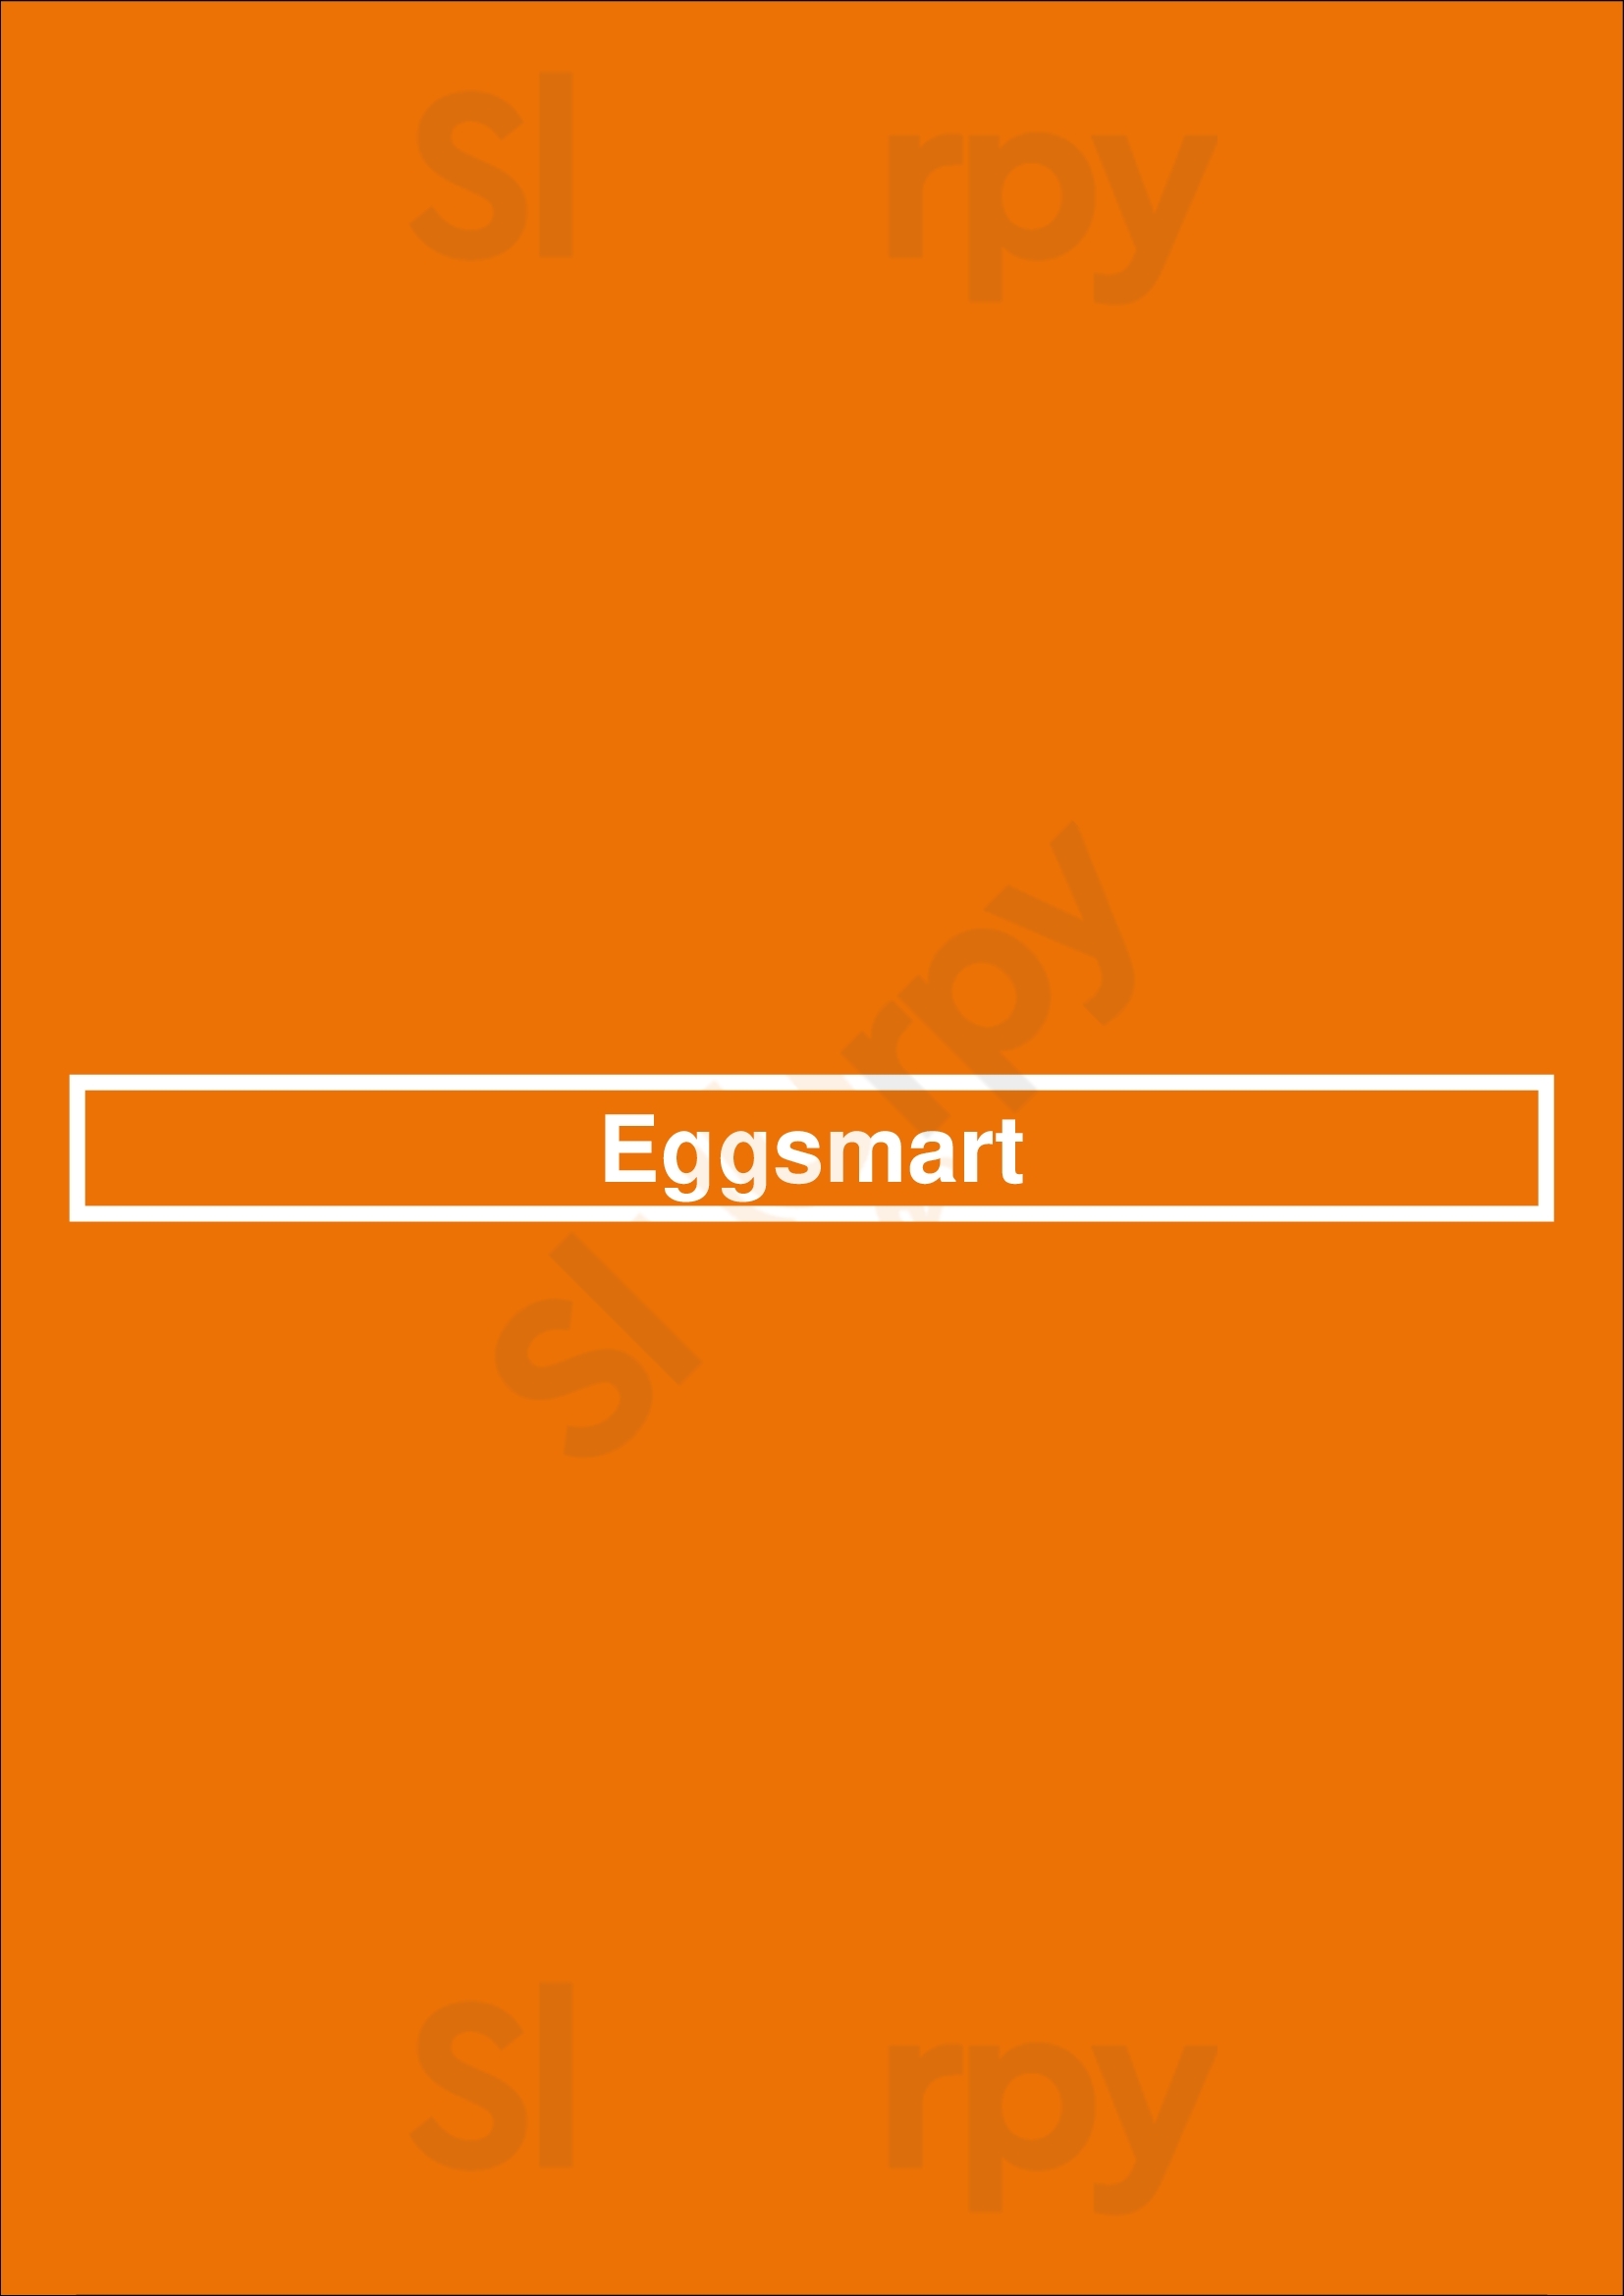 Eggsmart Markham Menu - 1